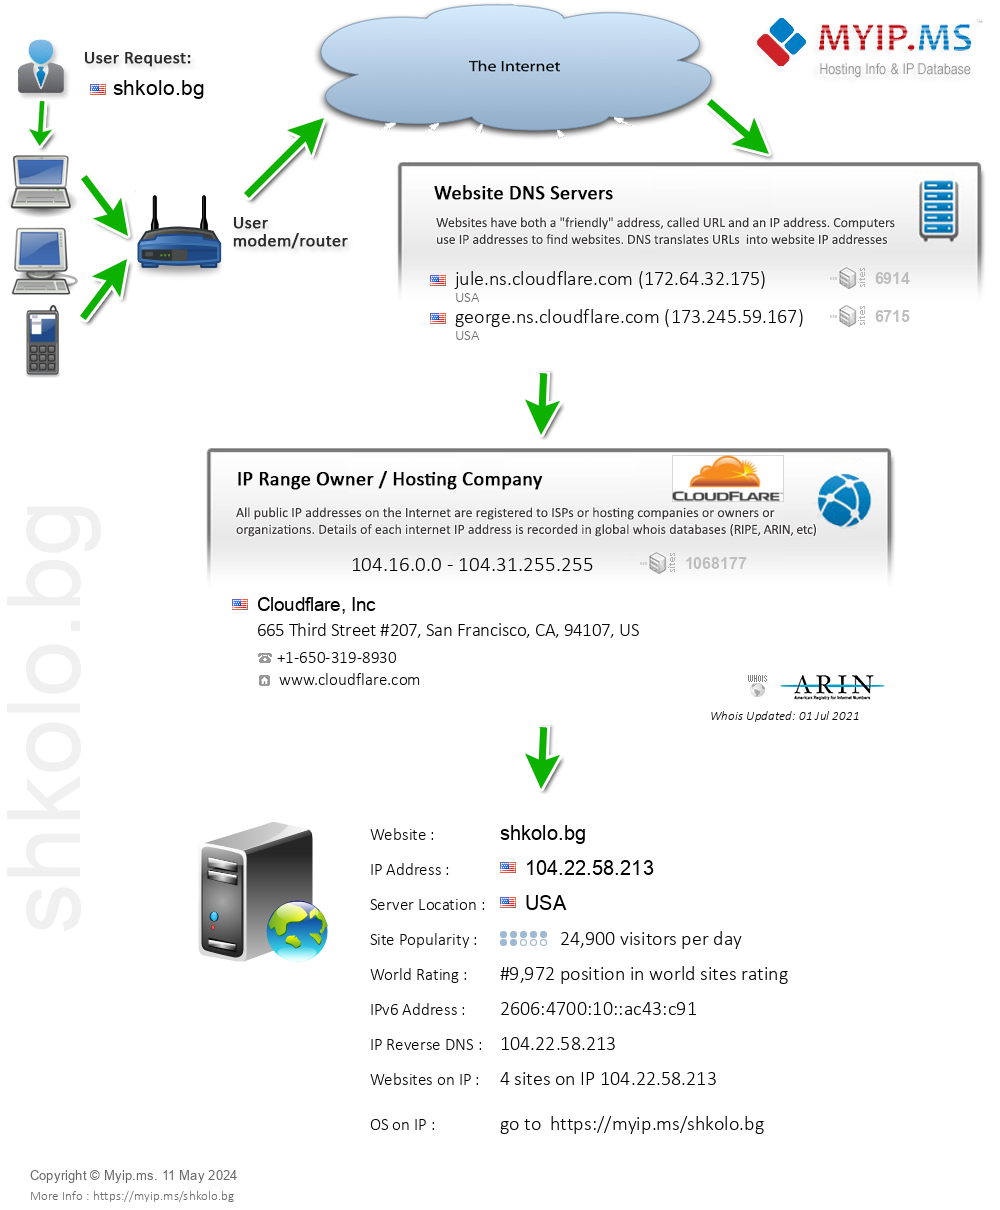 Shkolo.bg - Website Hosting Visual IP Diagram